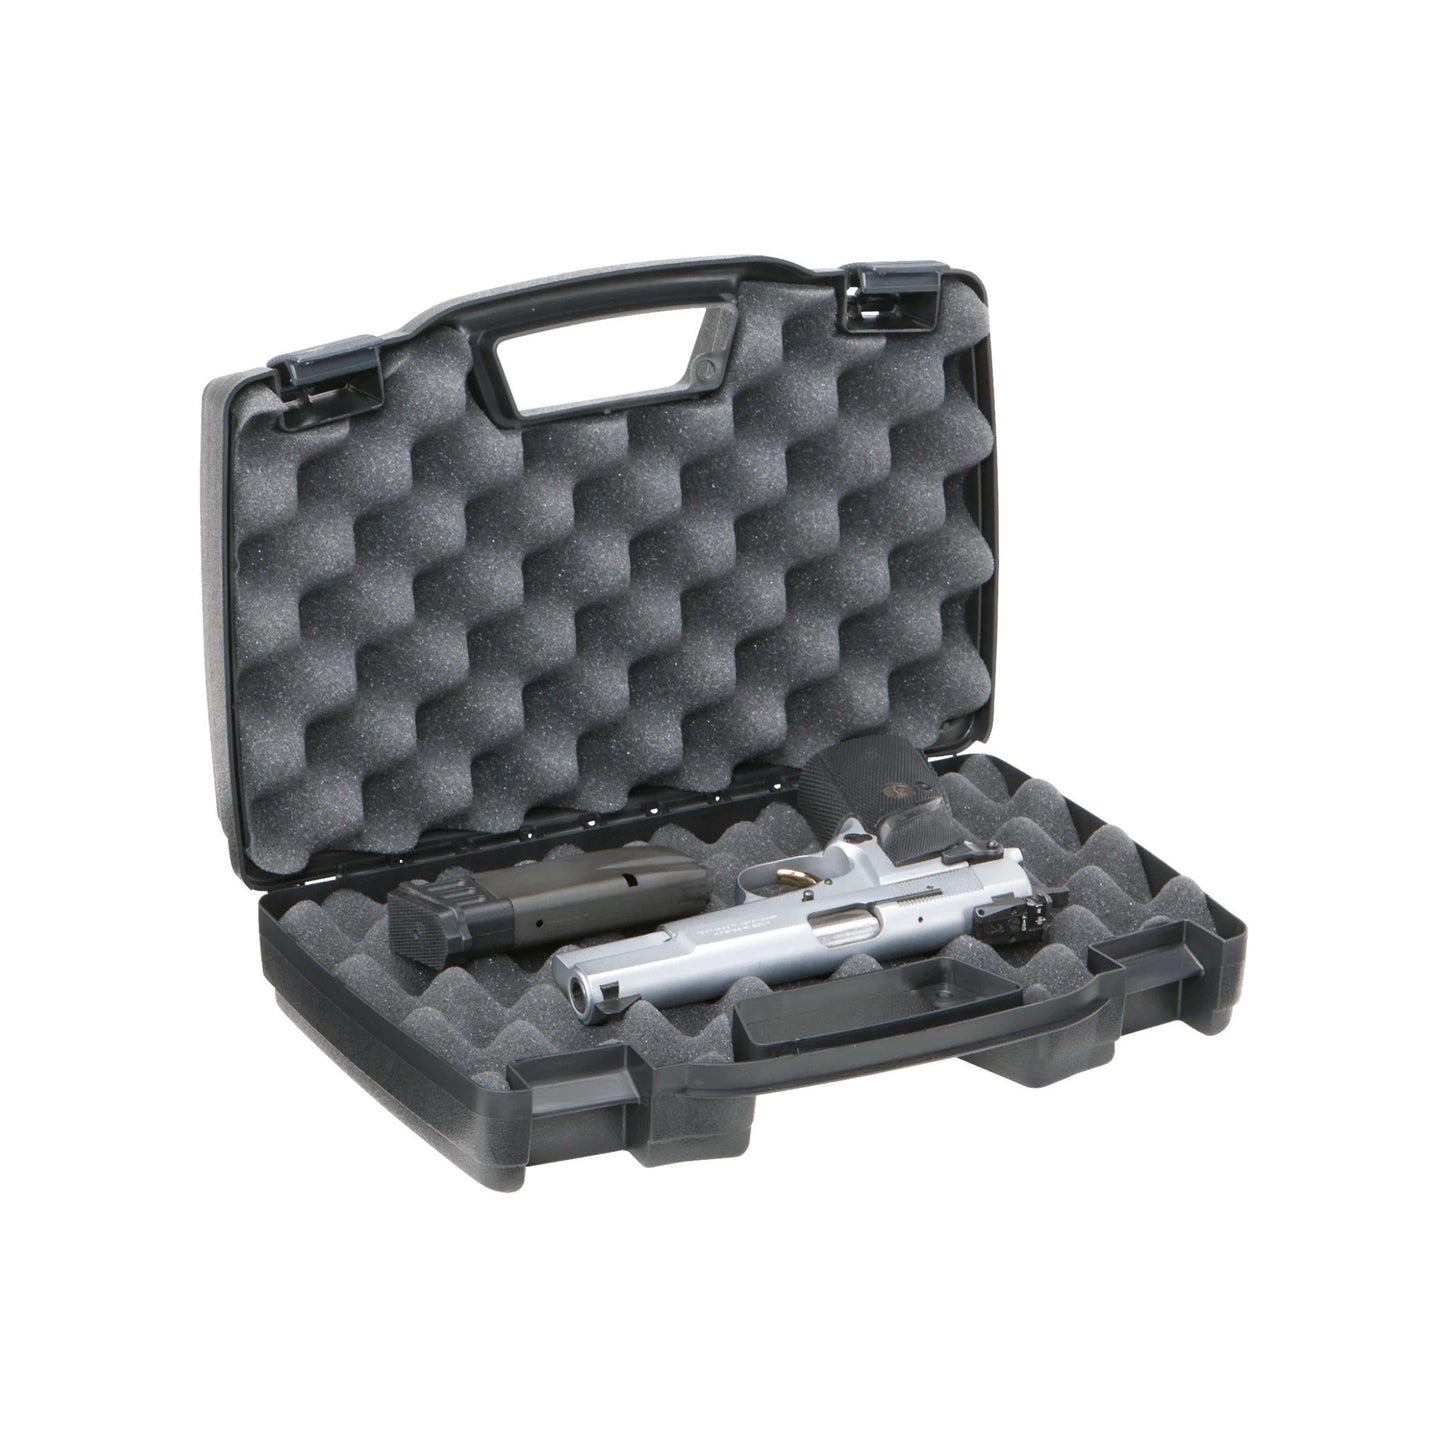 Plano Protector SE Series Single Pistol Case (140300)